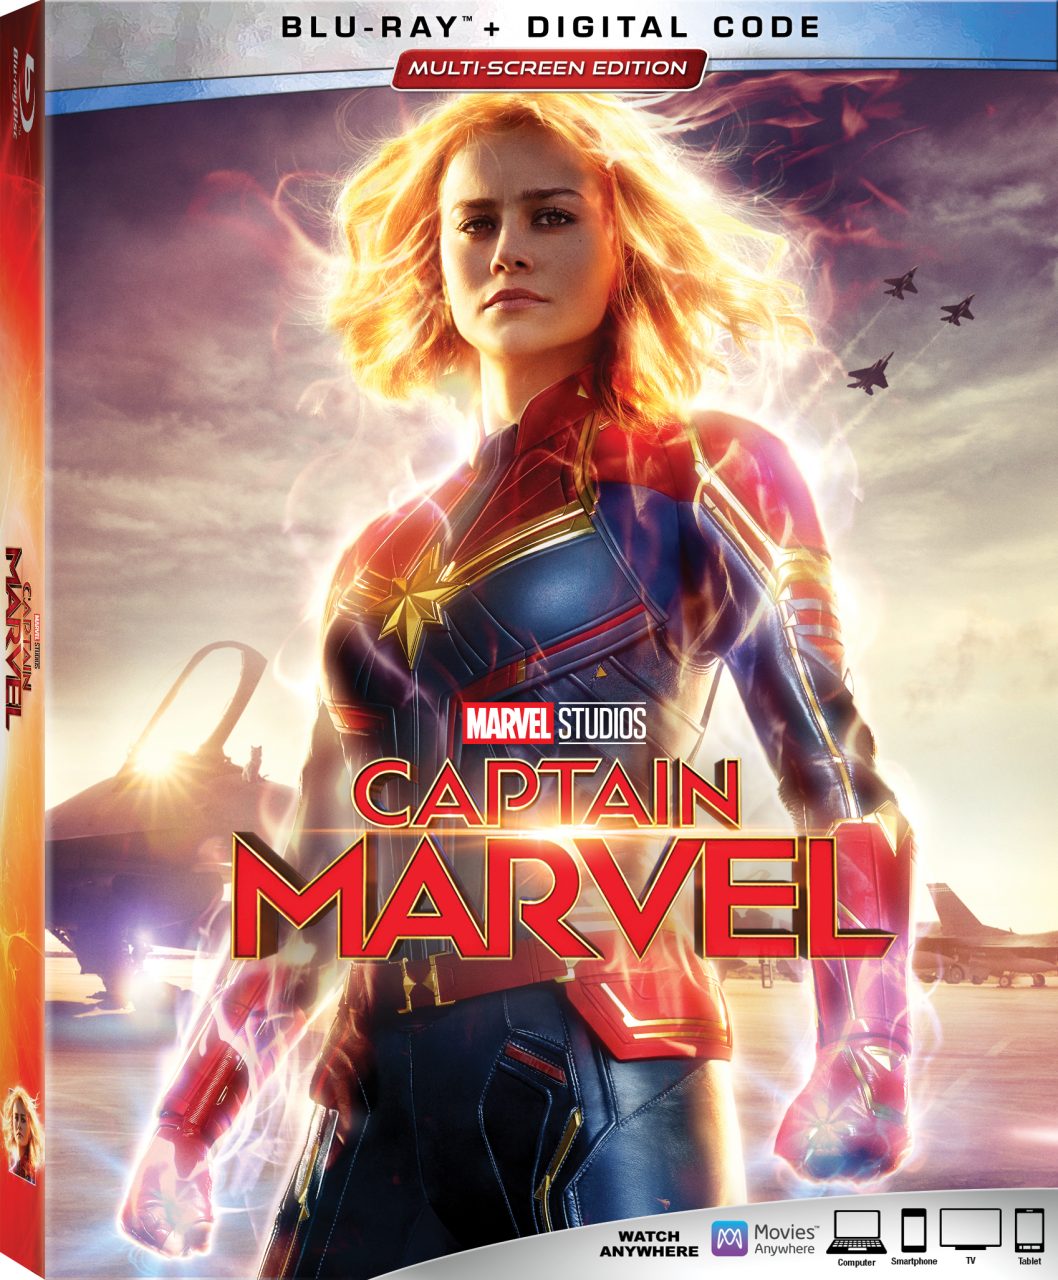 Captain Marvel Blu-Ray Combo Pack cover (Walt Disney Studios Home Entertainment)